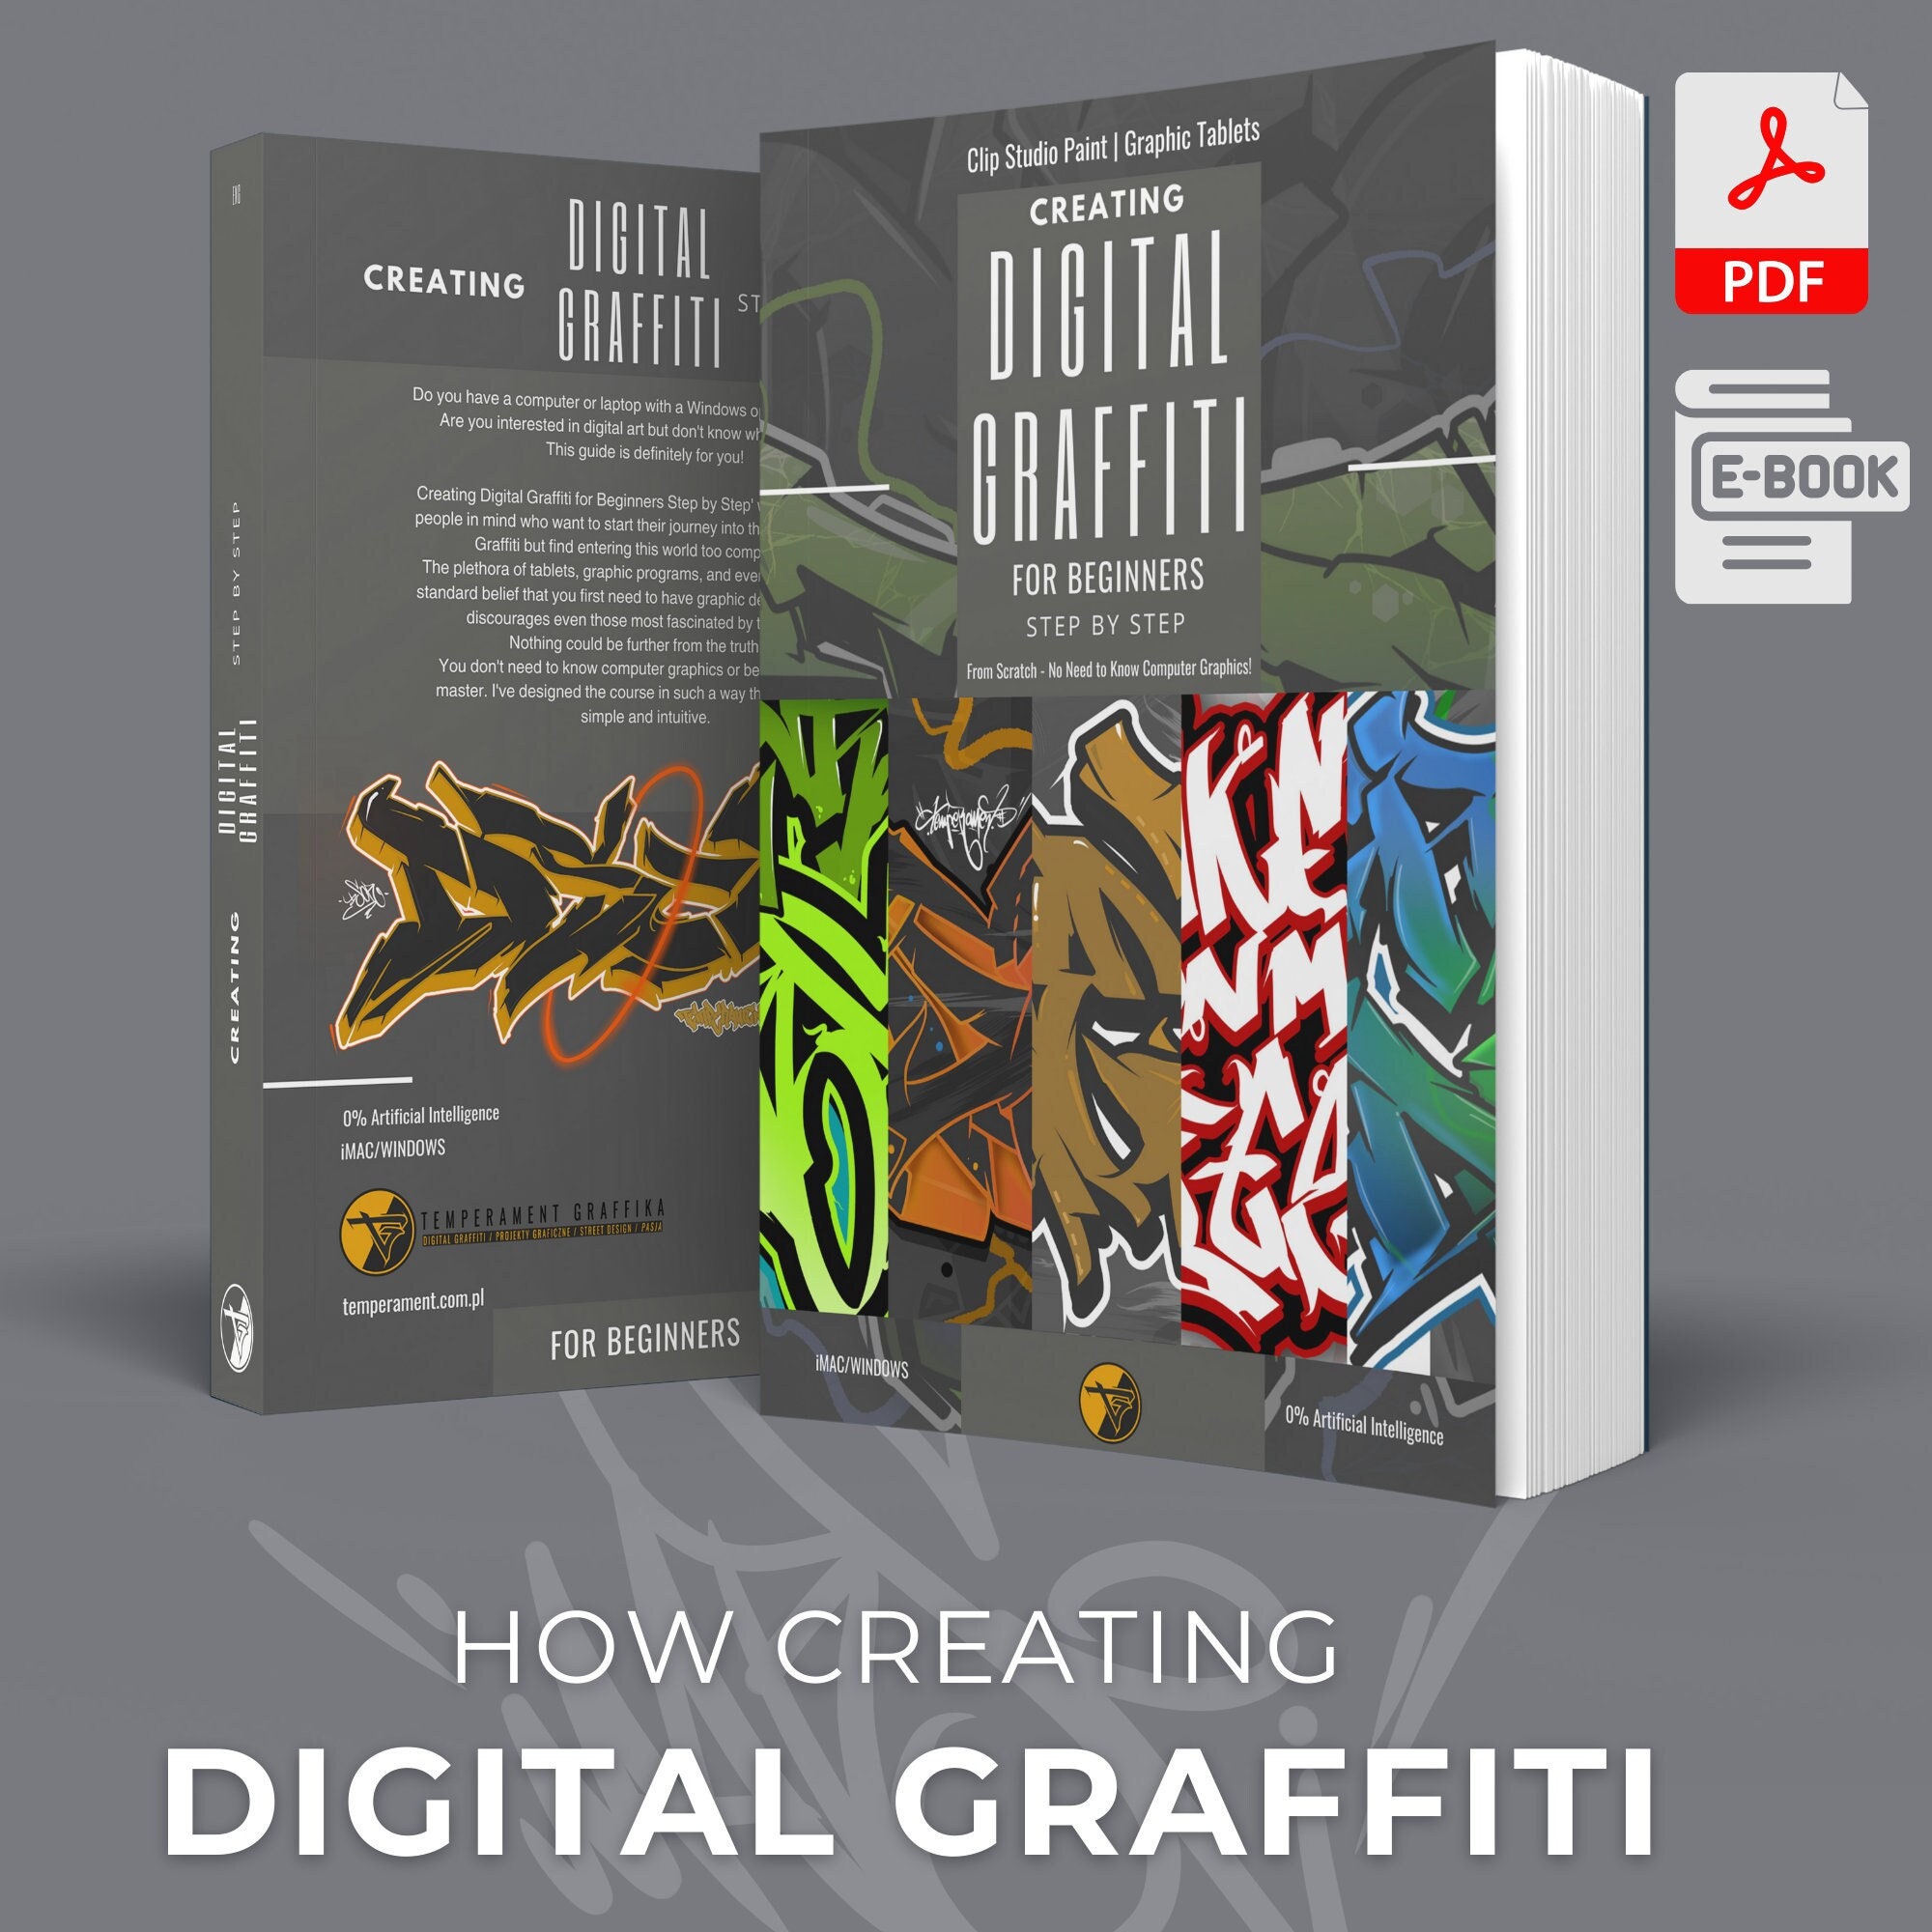 Digital drawing tutorial: How to tag a digital graffiti wall using